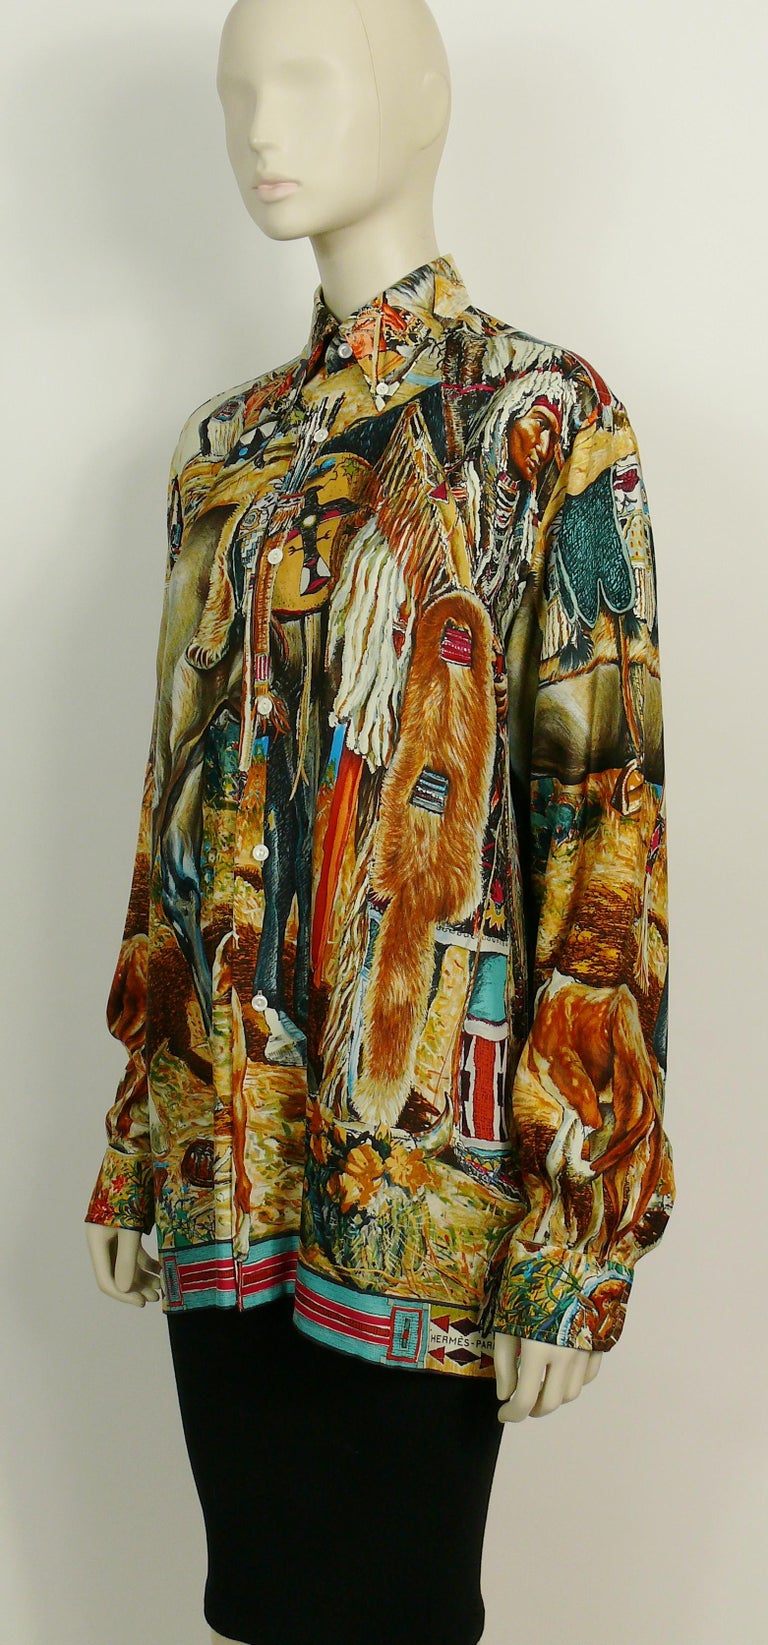 Hermes Vintage Native American Indian Shirt by Kermit Oliver